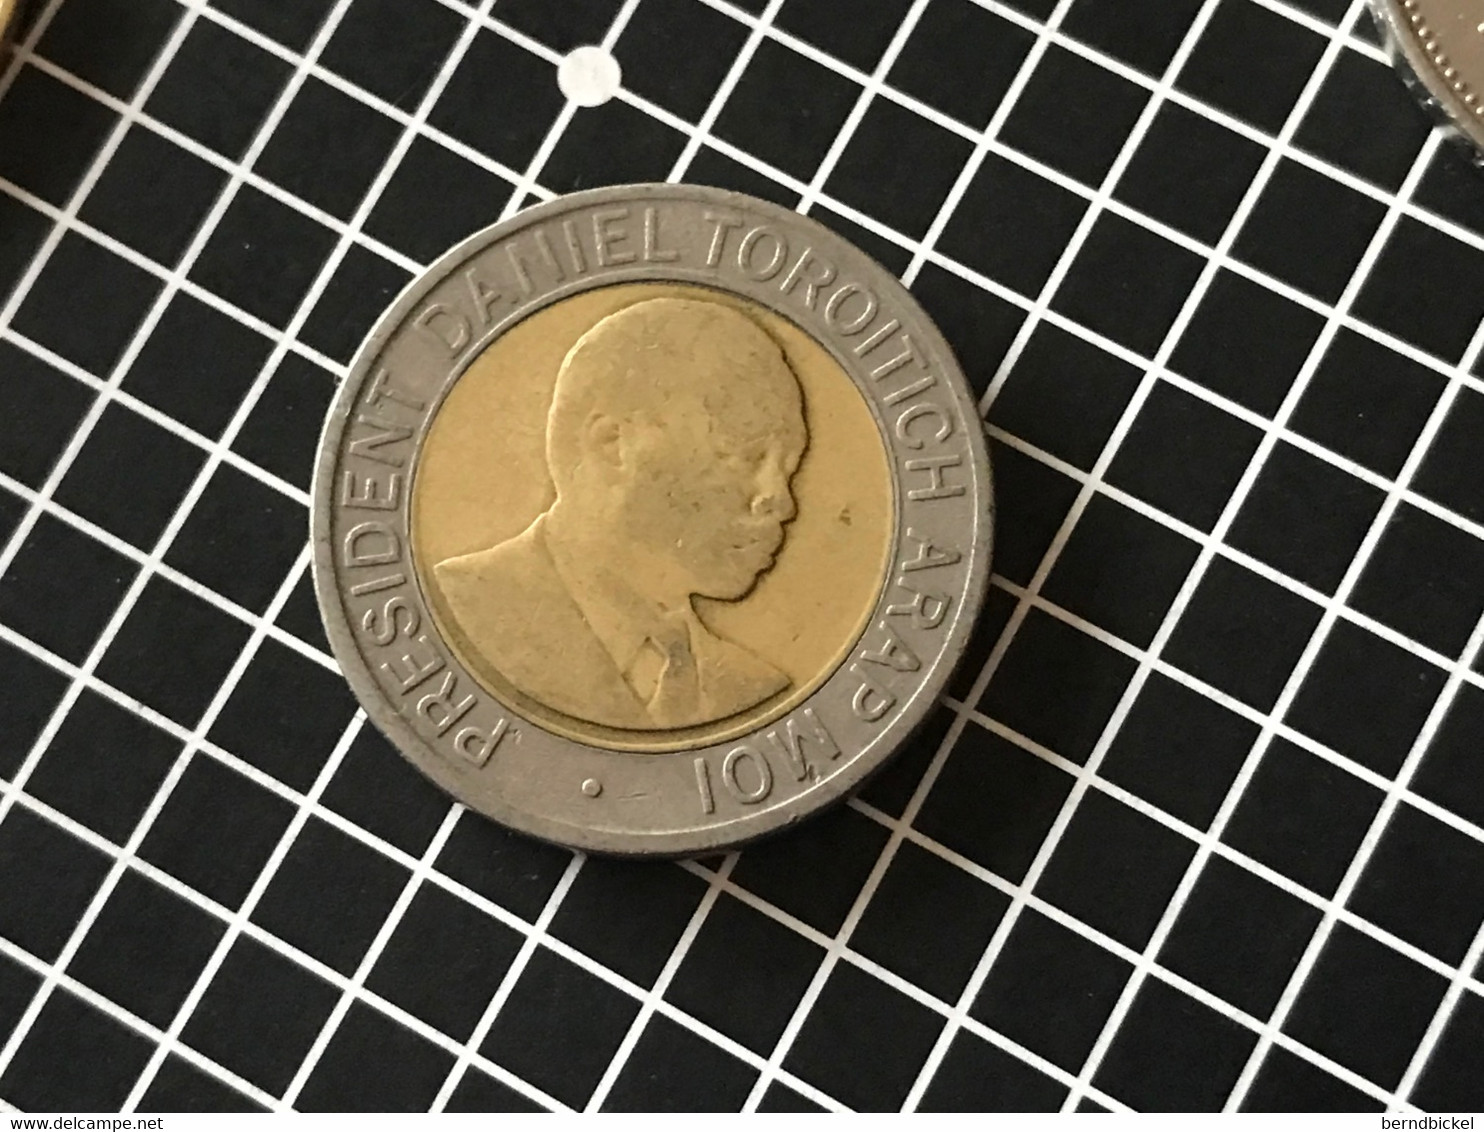 Münze Münzen Umlaufmünze Kenia 20 Shilling 1998 - Kenya